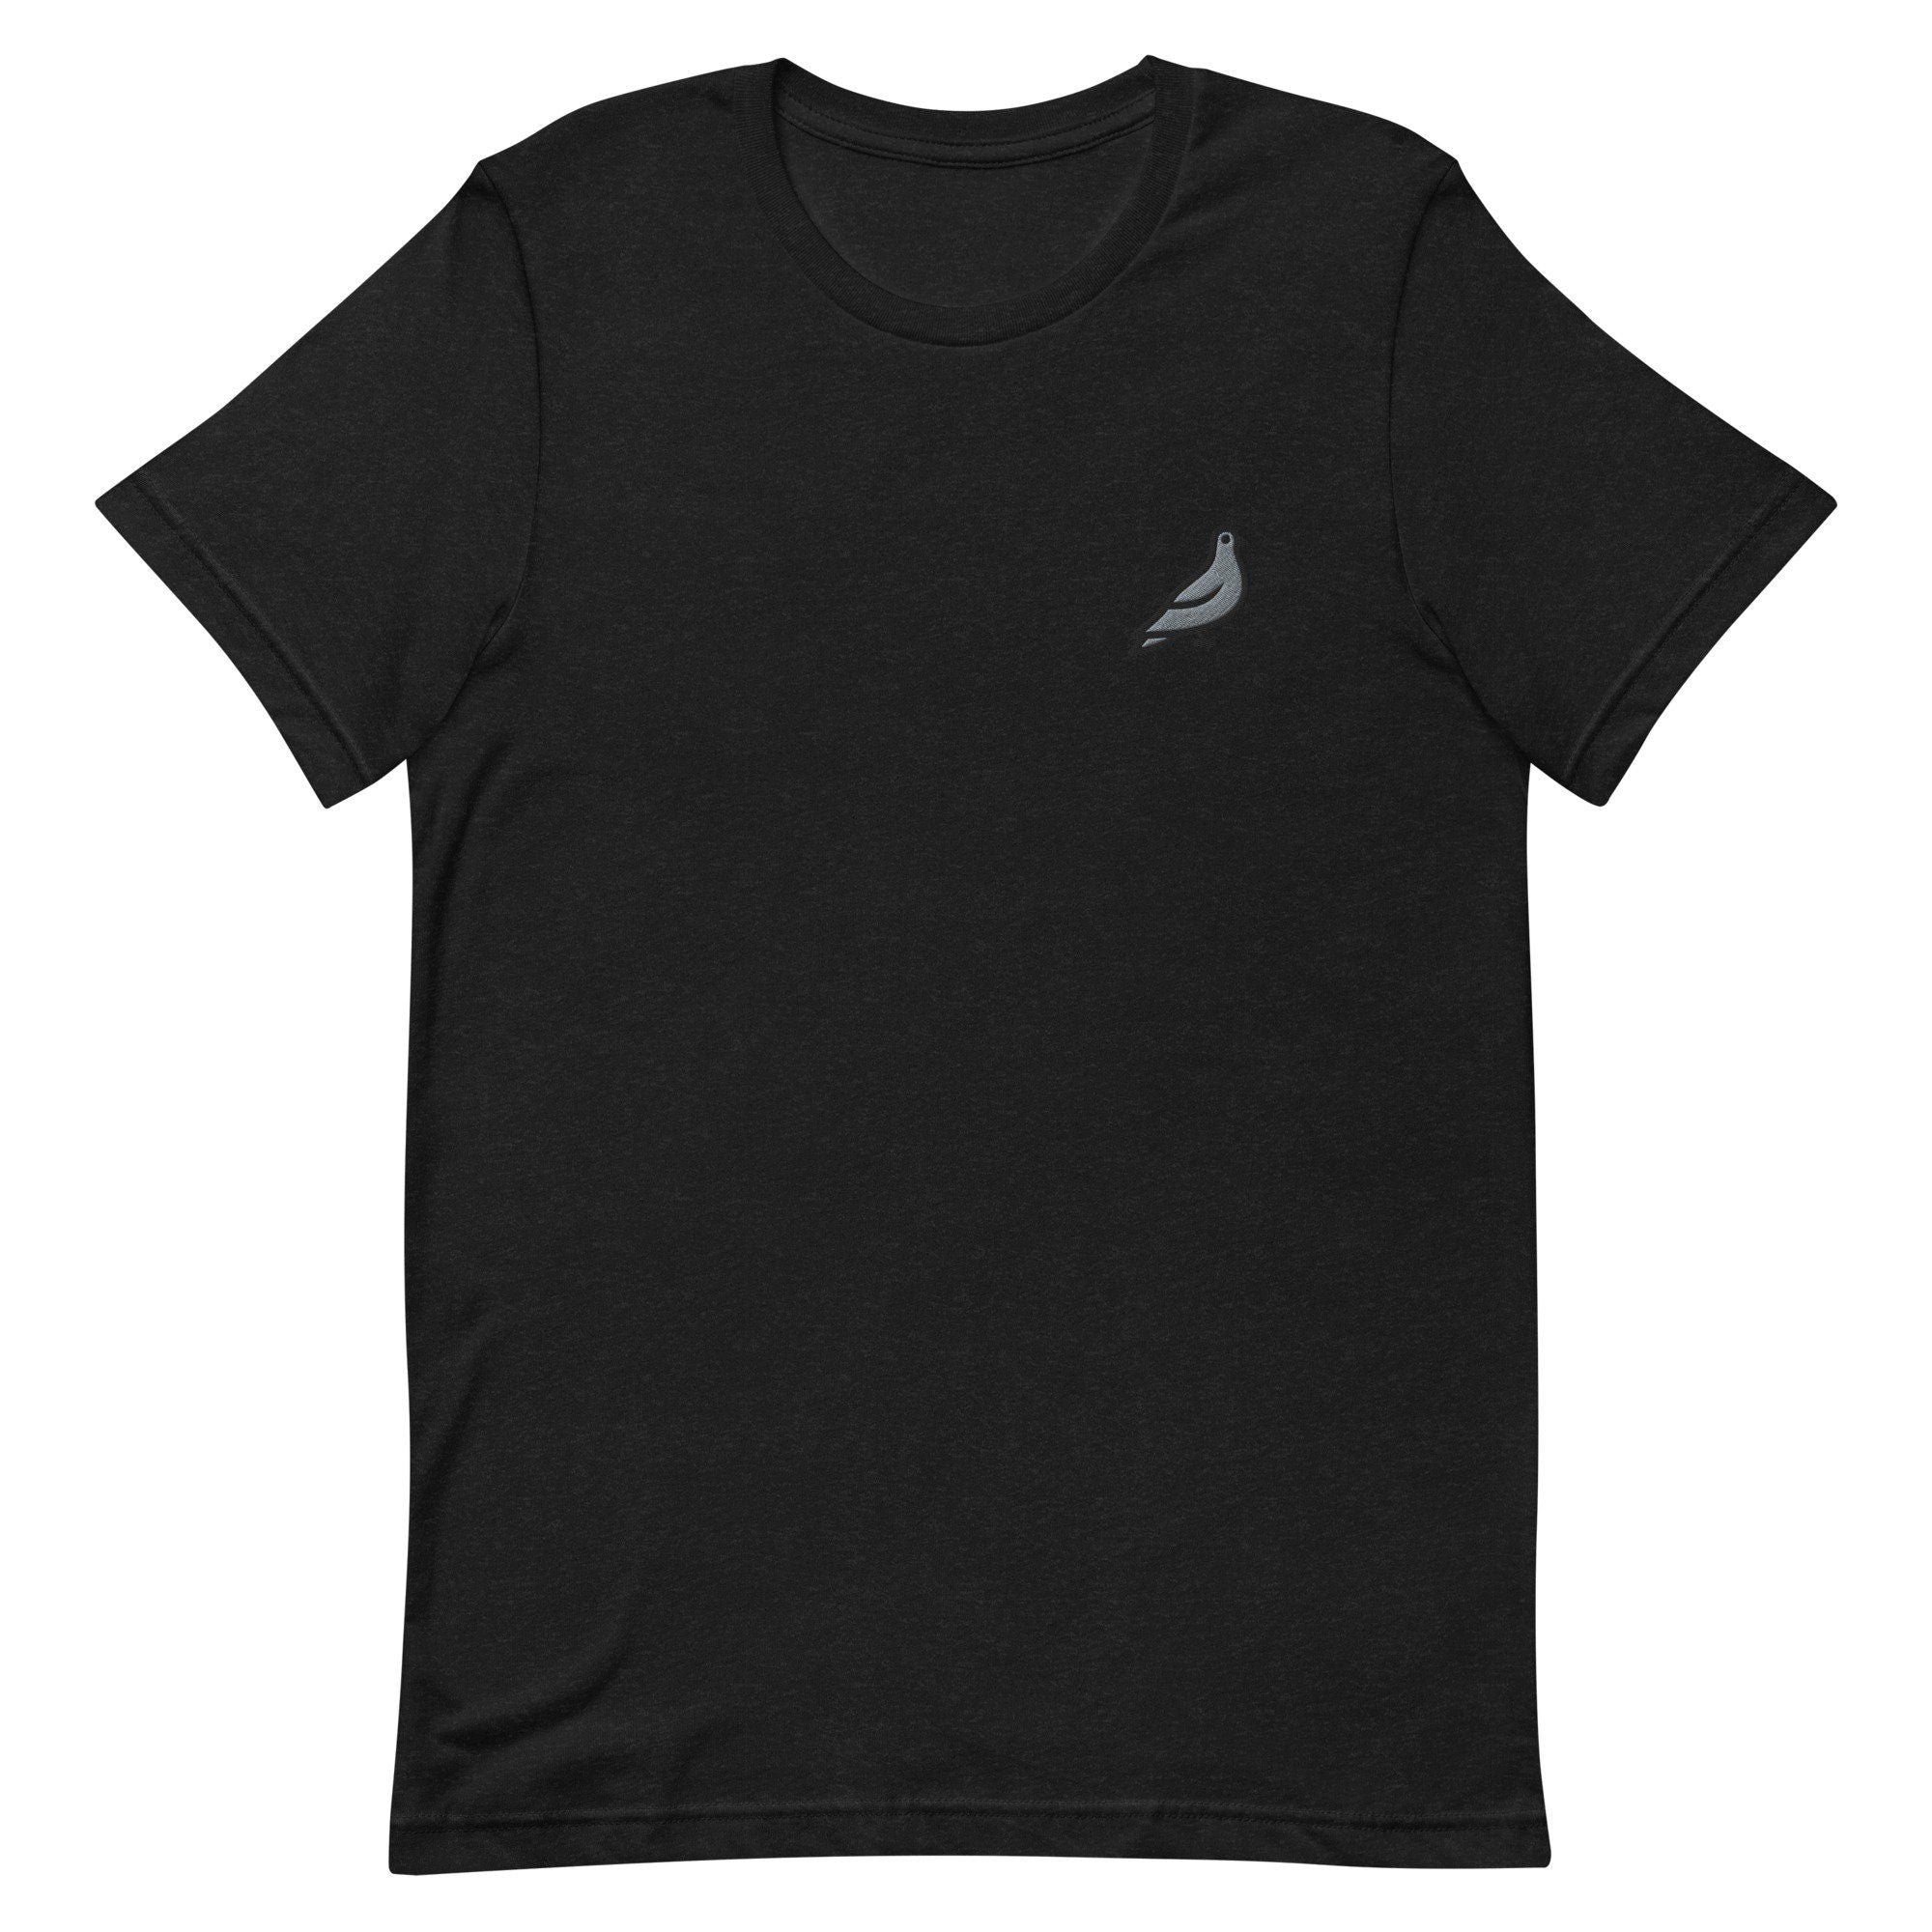 Pigeon Premium Men's T-Shirt, Embroidered Men's T-Shirt Gift for Boyfriend, Men's Short Sleeve Shirt - Multiple Colors